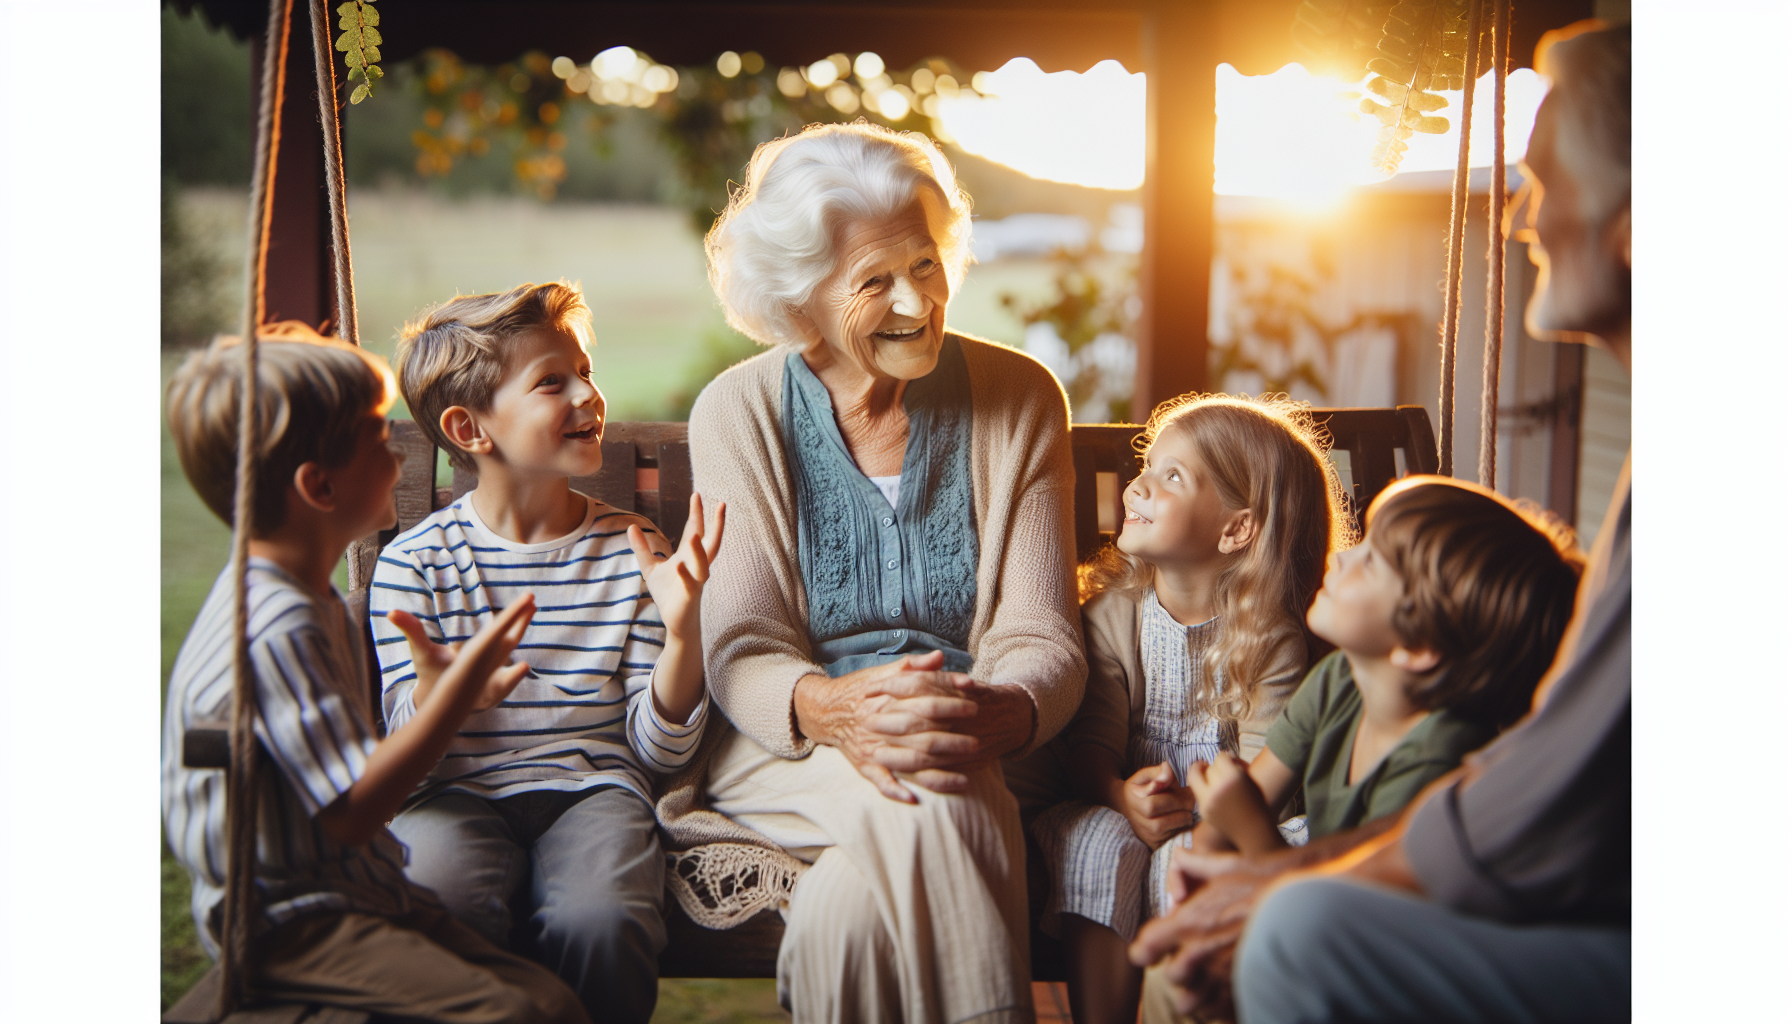 Illustration of a paternal grandmother bonding with her grandchildren